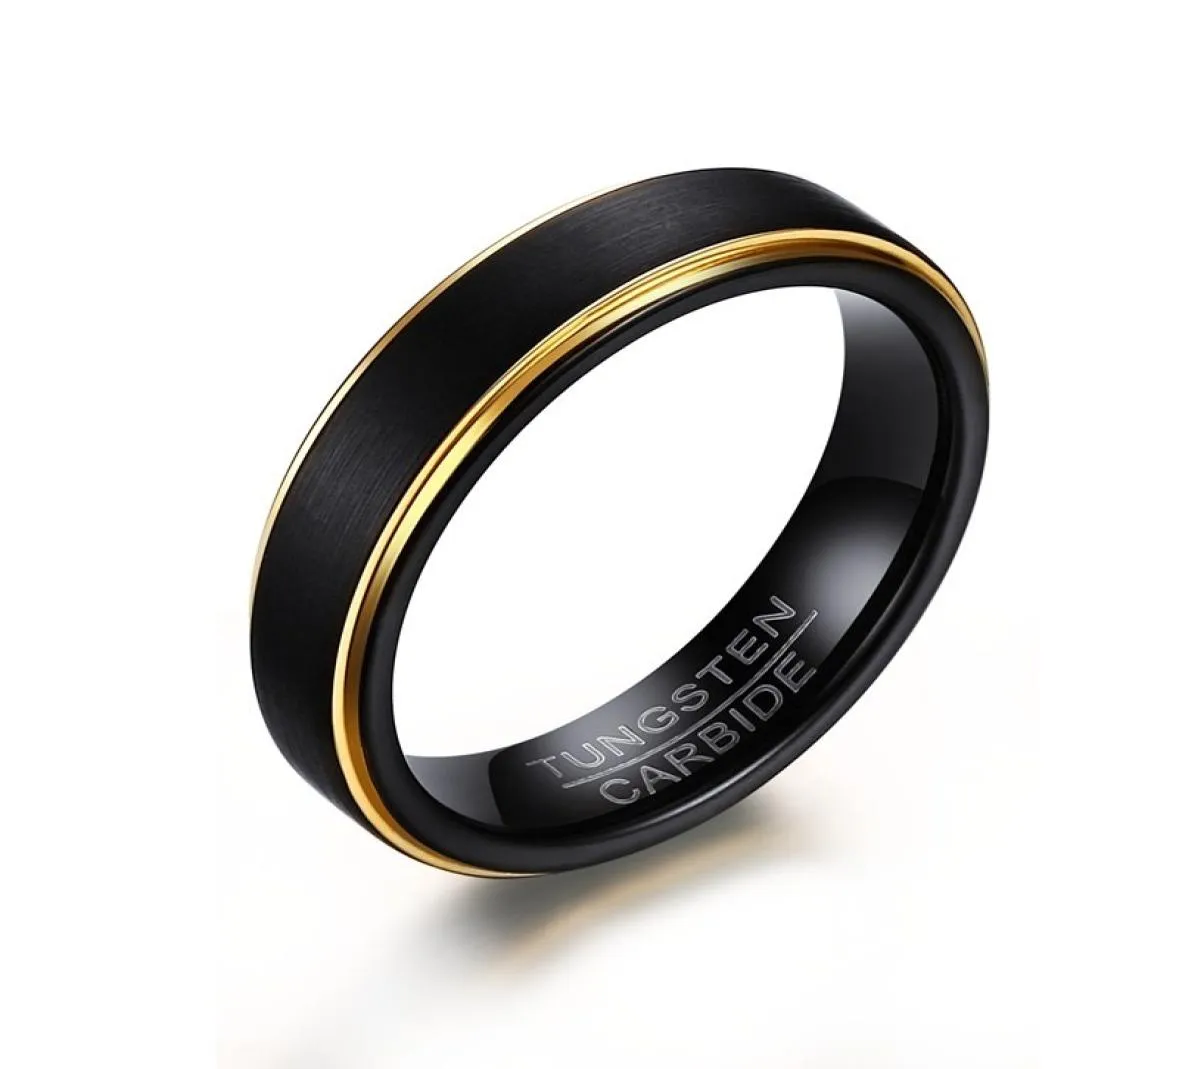 Domilay Mens Basic Tungsten Steel Black Goldcolor Stepped Redge Fineries Center Center Rings для мужской свадебной группы ювелирных изделий6284399